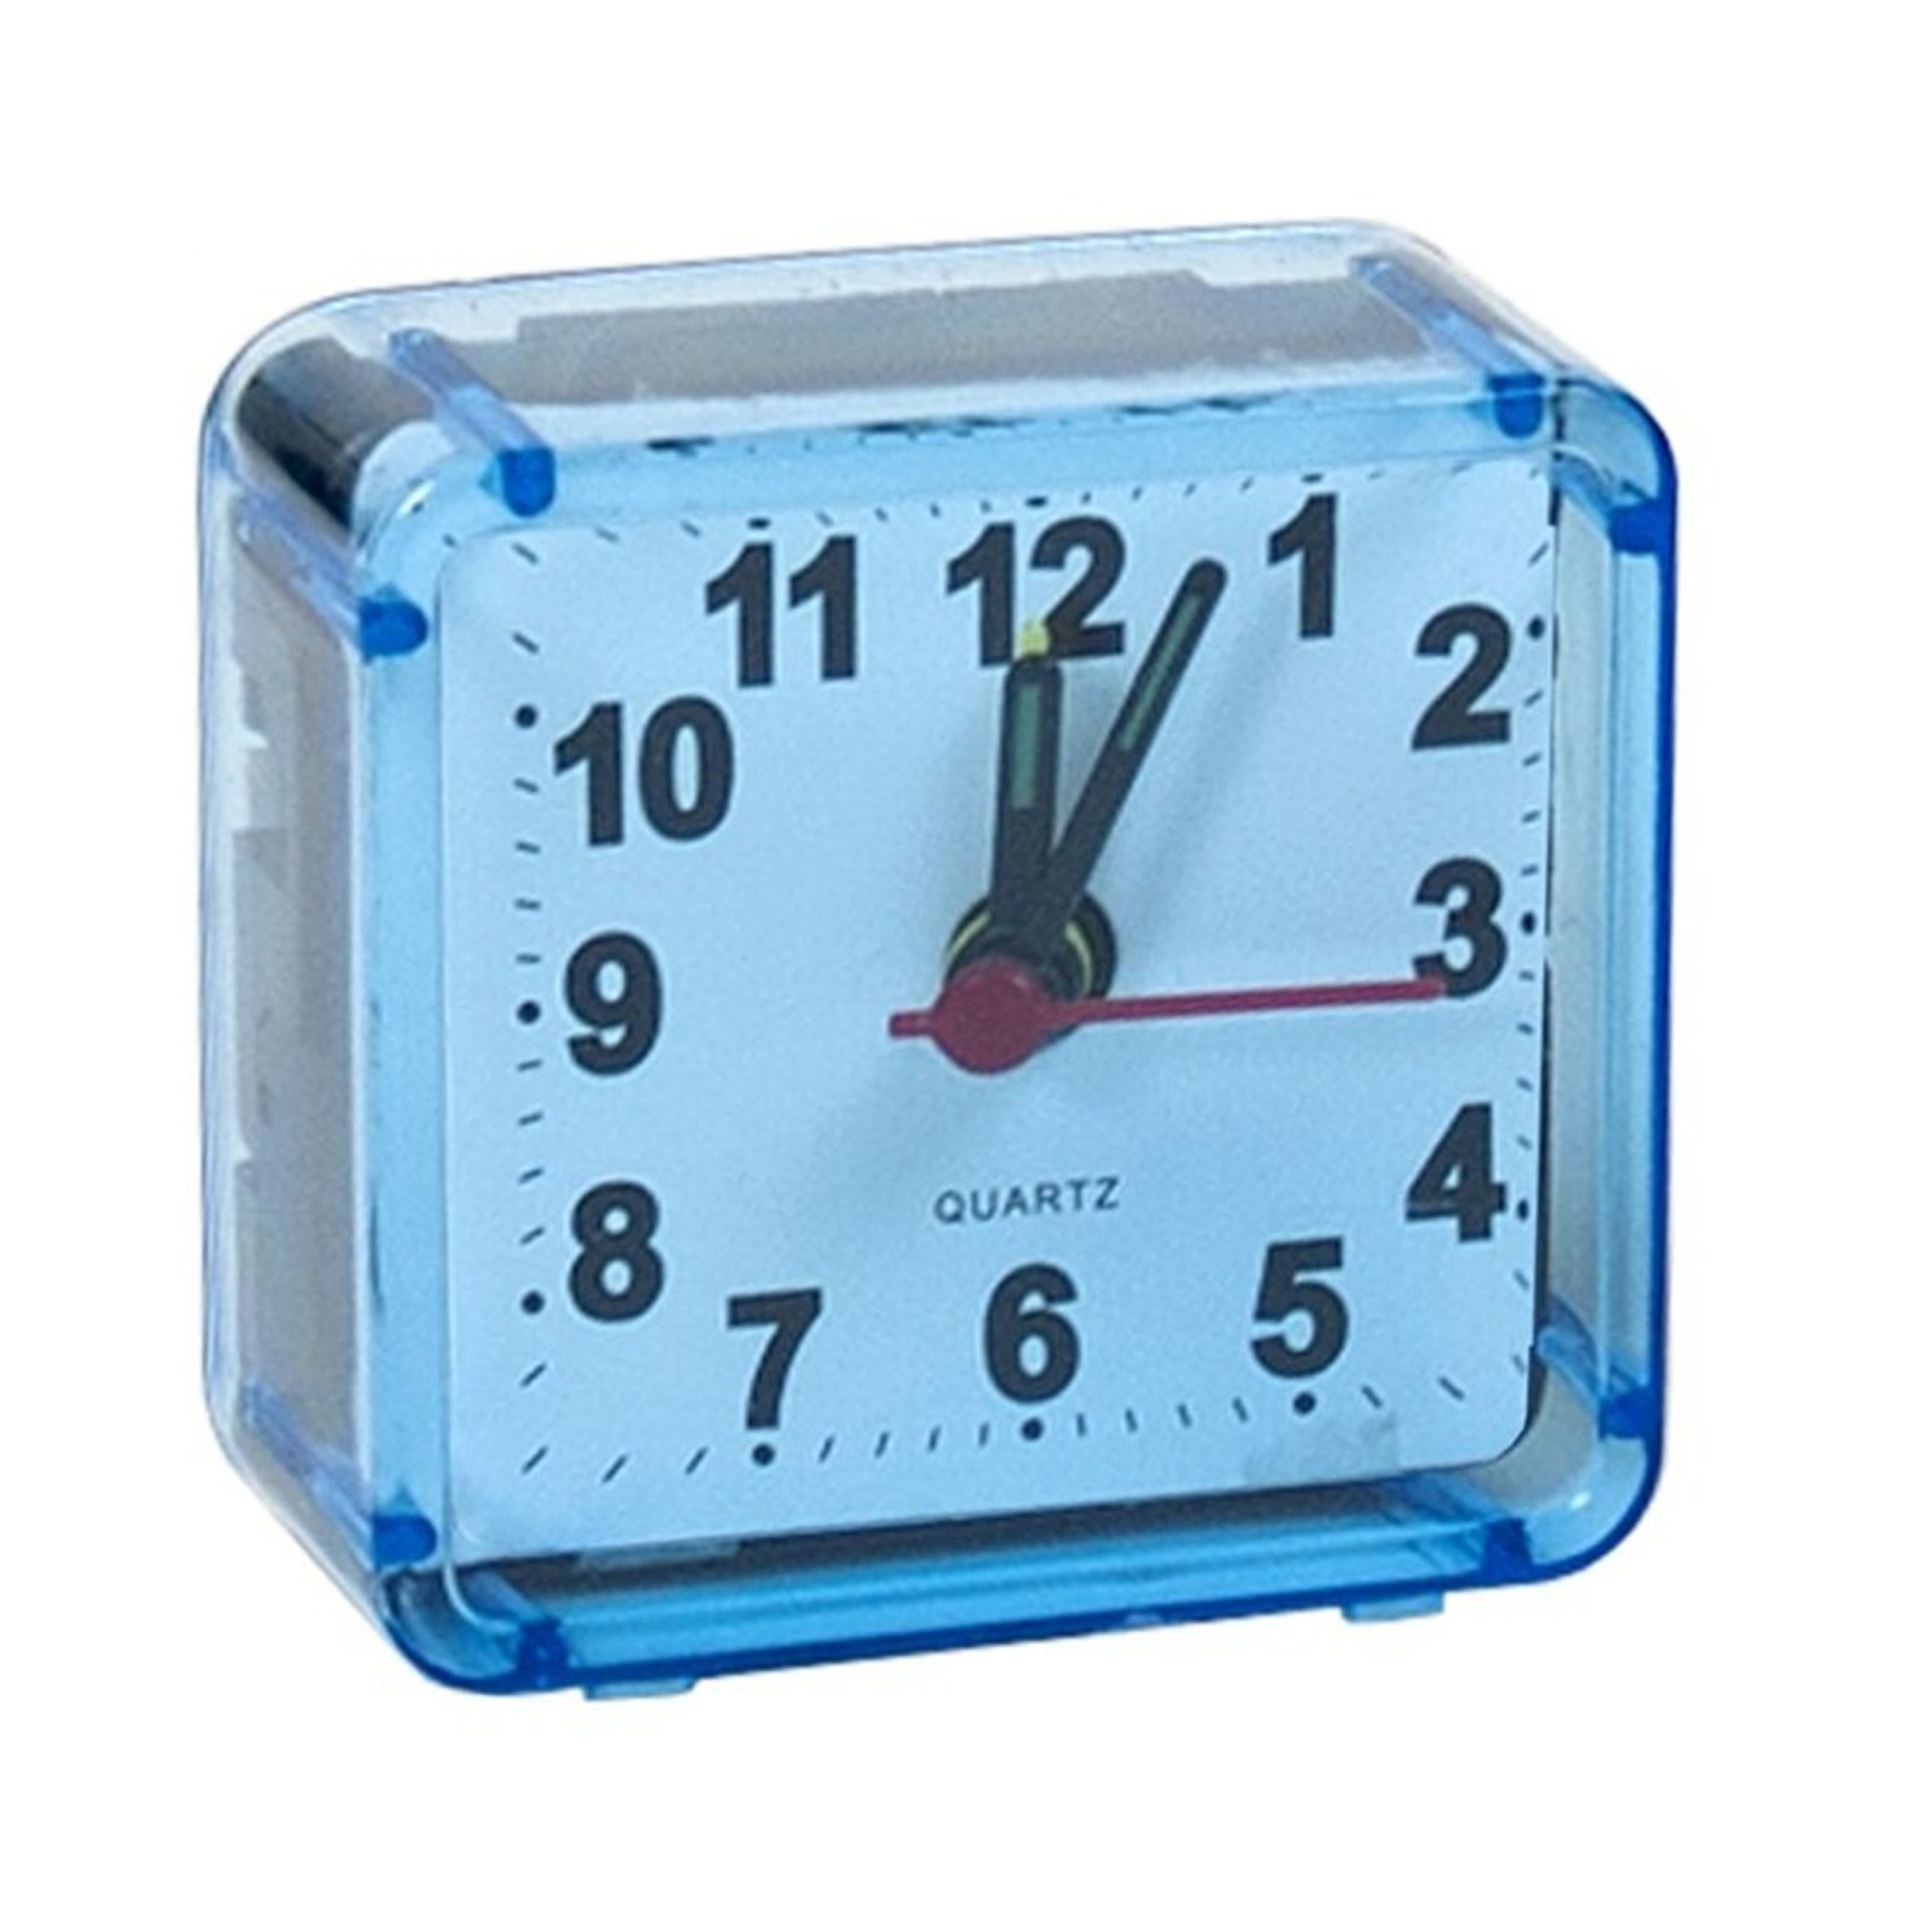 Reiswekker-alarmklok analoog licht blauw kunststof 6 x 3 cm klein model